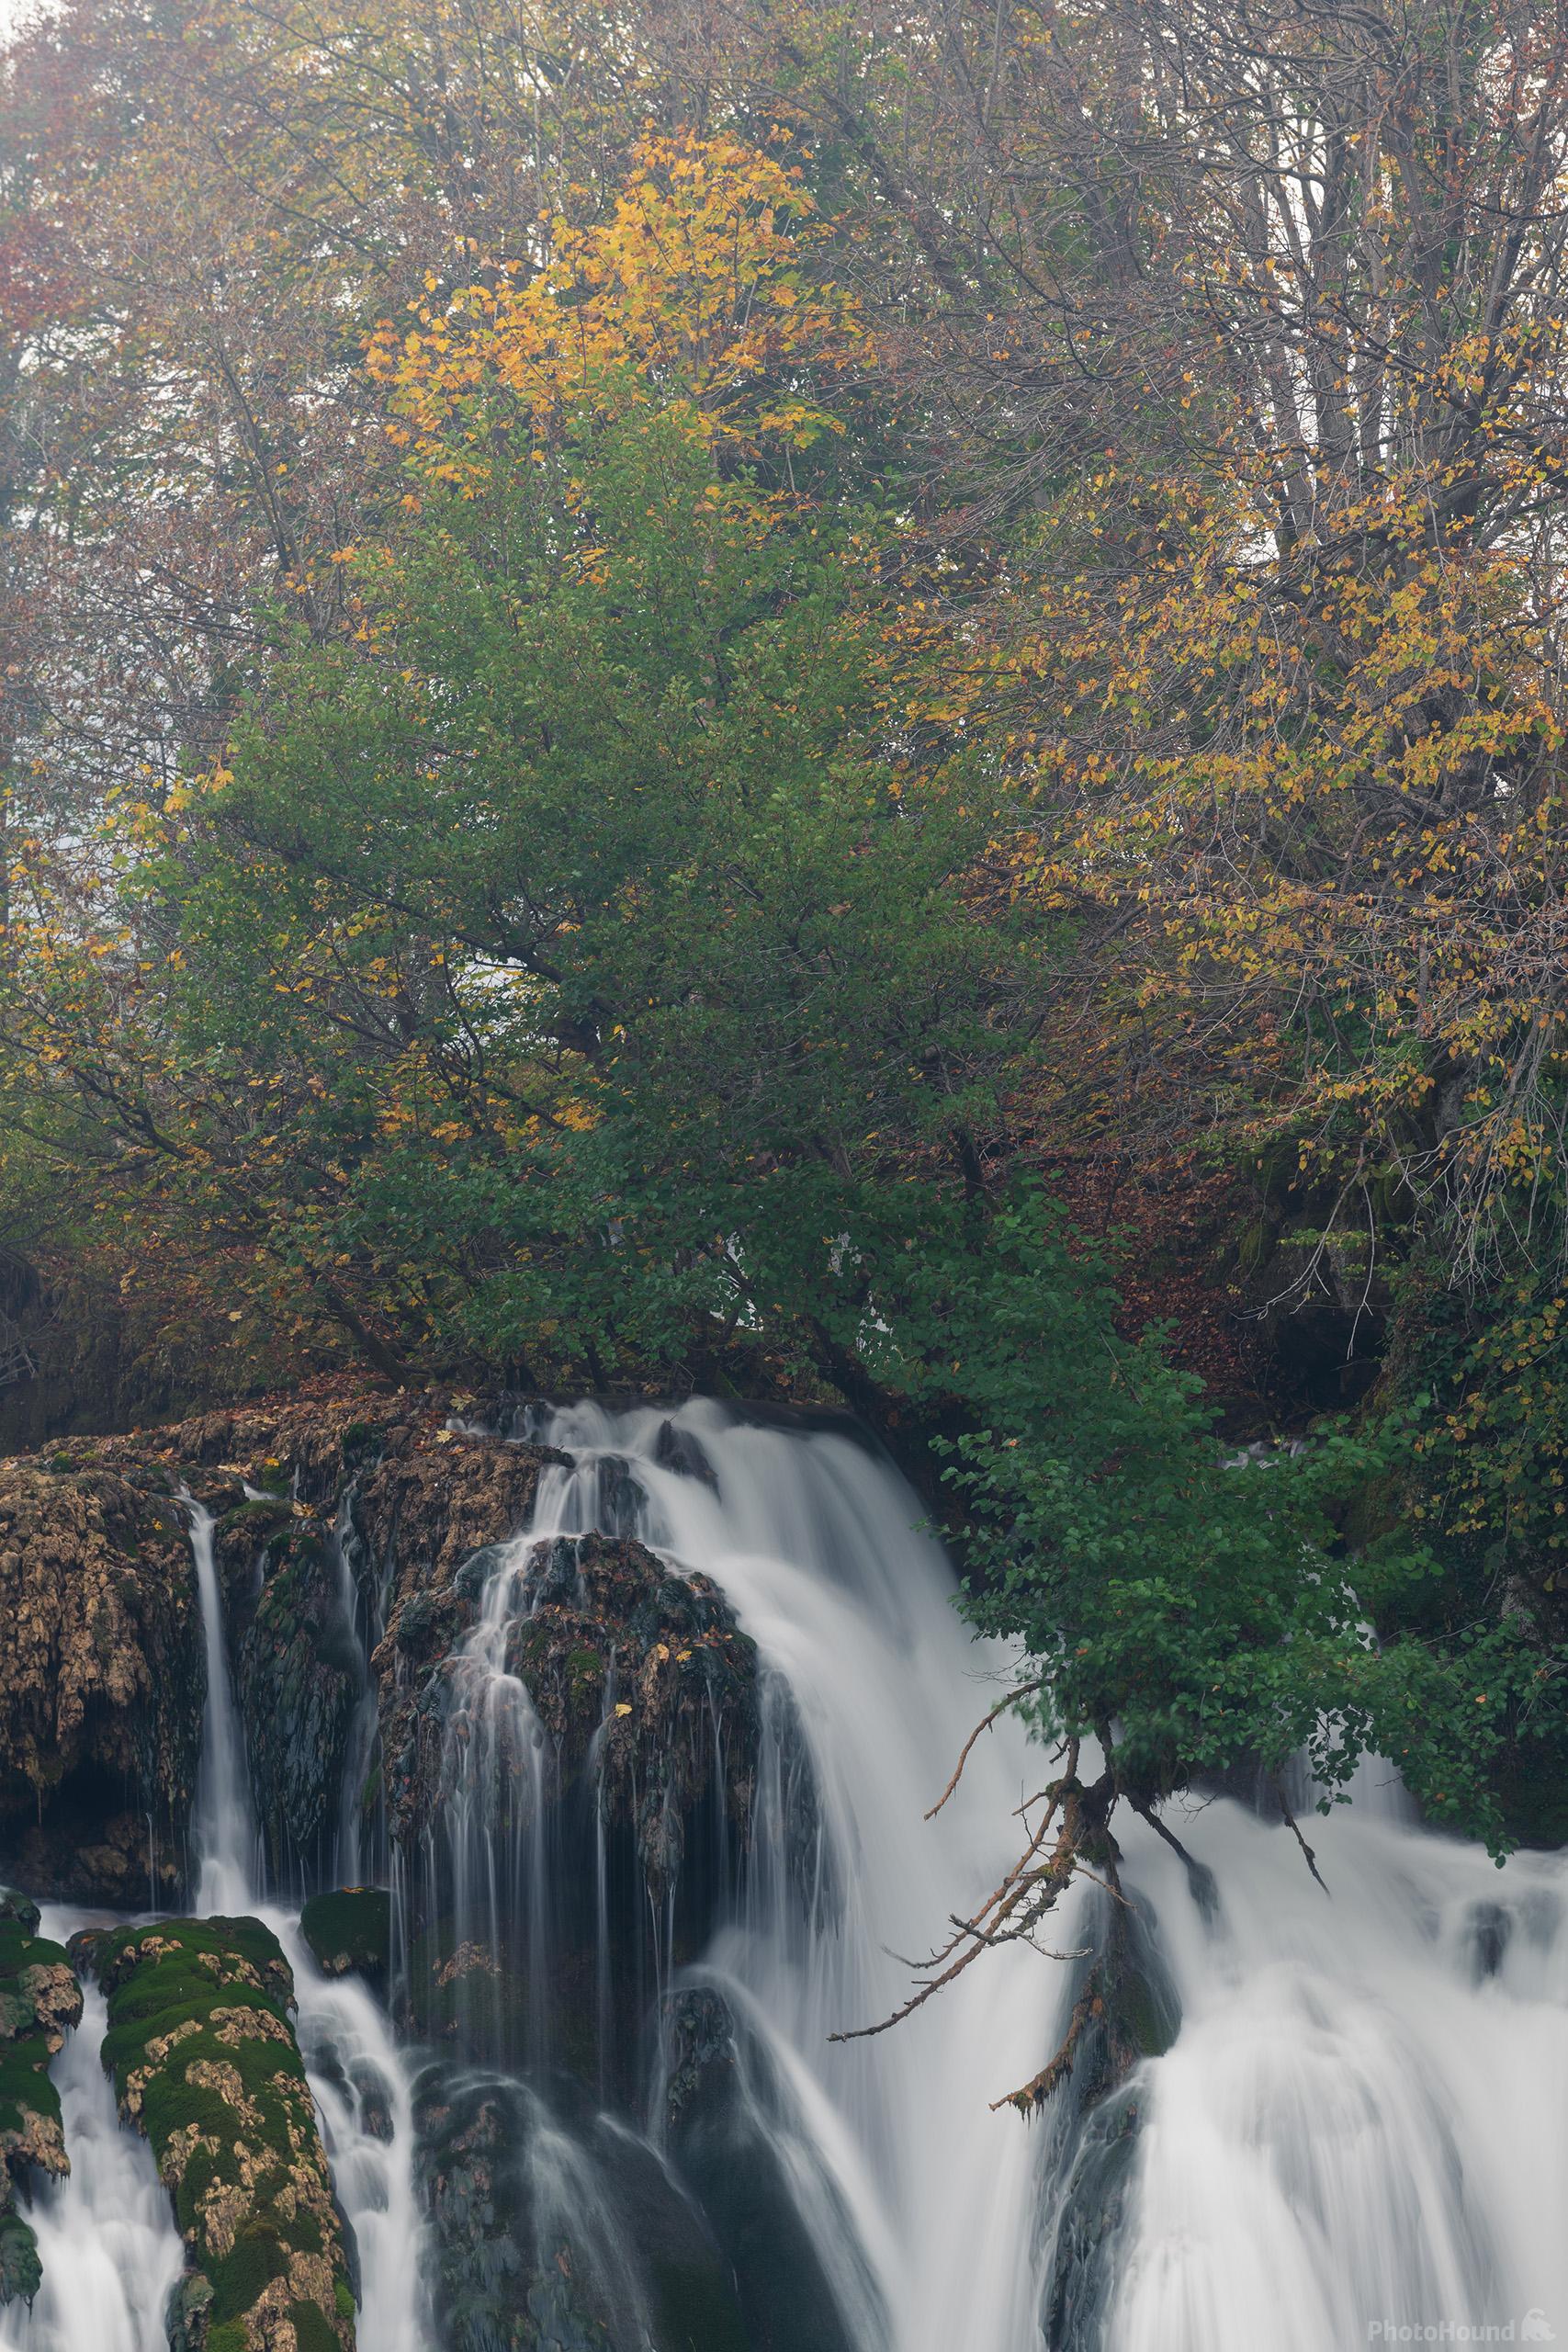 Image of Martin Brod Waterfalls by Luka Esenko